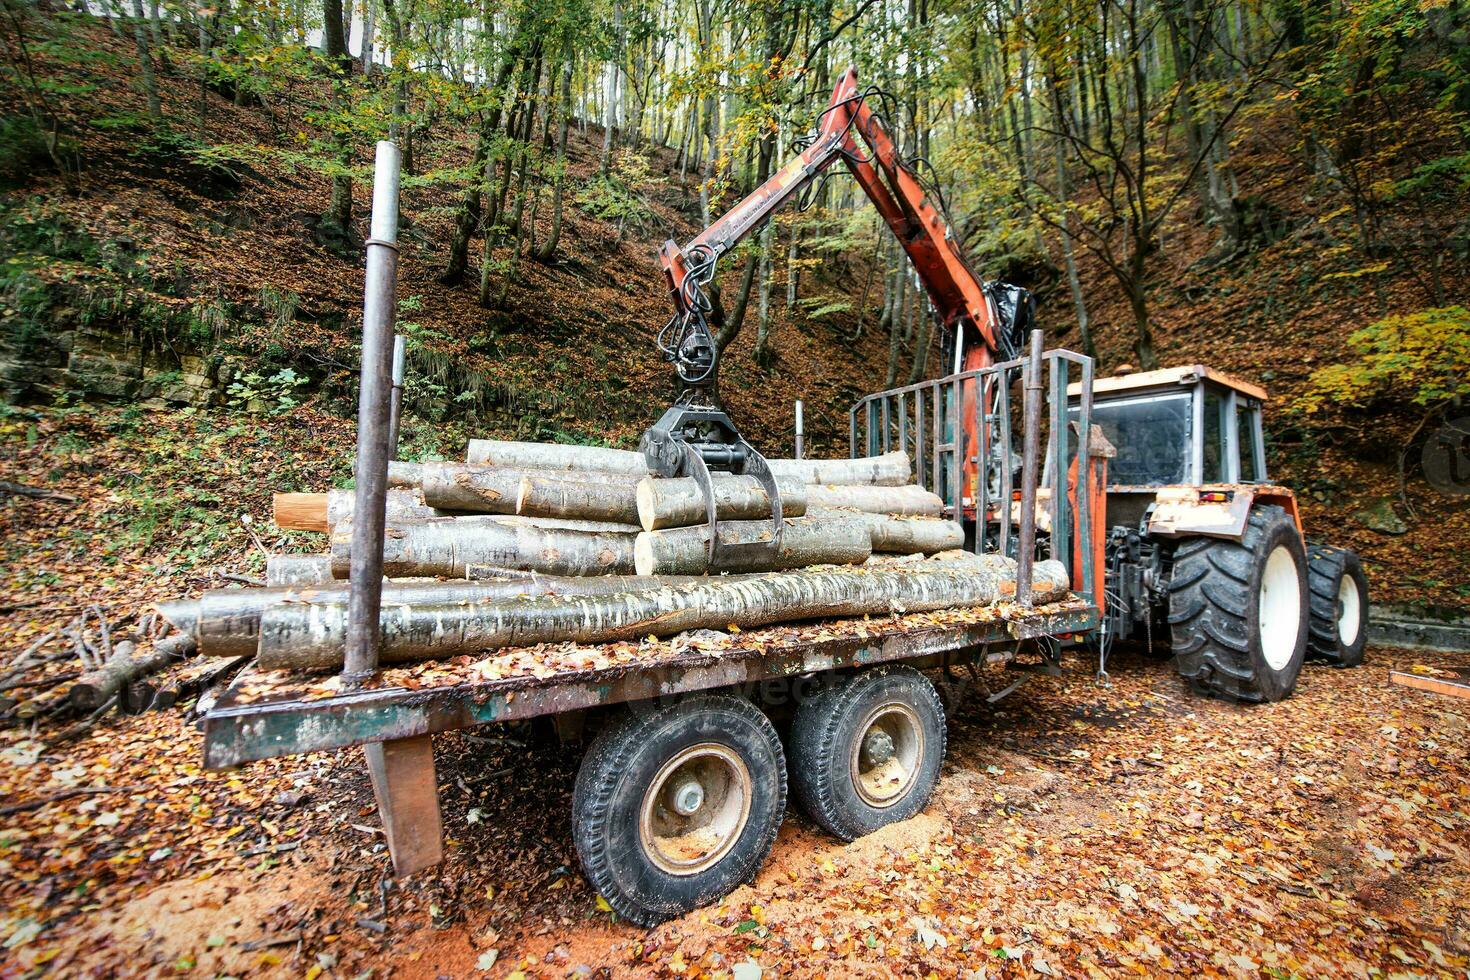 cargas do madeira a partir de recentemente cortar árvores foto